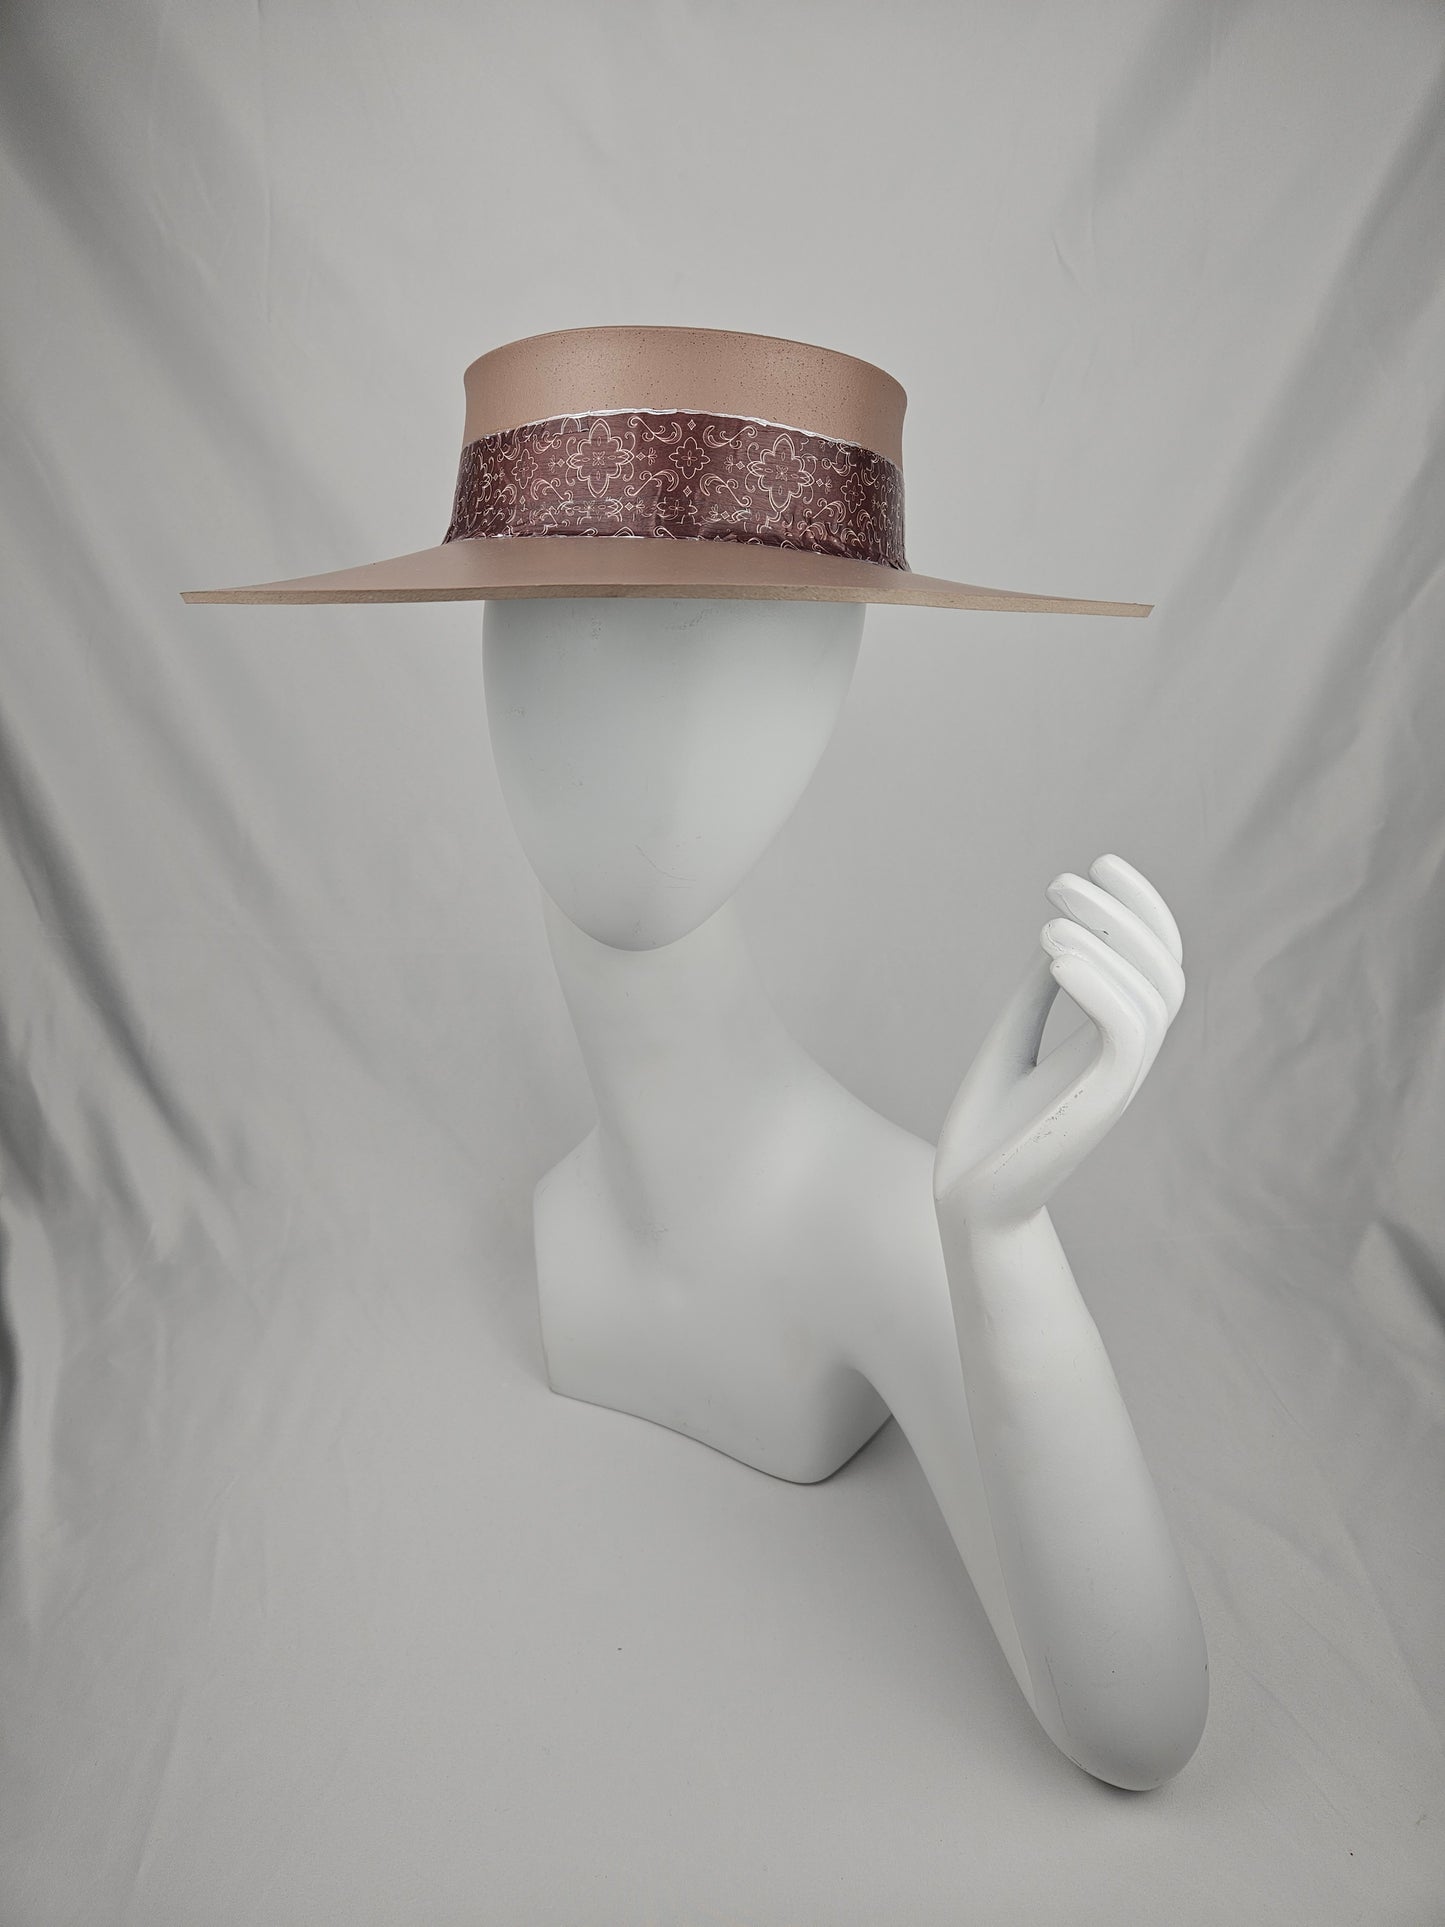 Rich Brown Audrey Foam Sun Visor Hat with Burgundy Brown Geometric Band: Wedding, Walks, Brunch, Swim, Golf, Easter, Church, No Headache, Derby